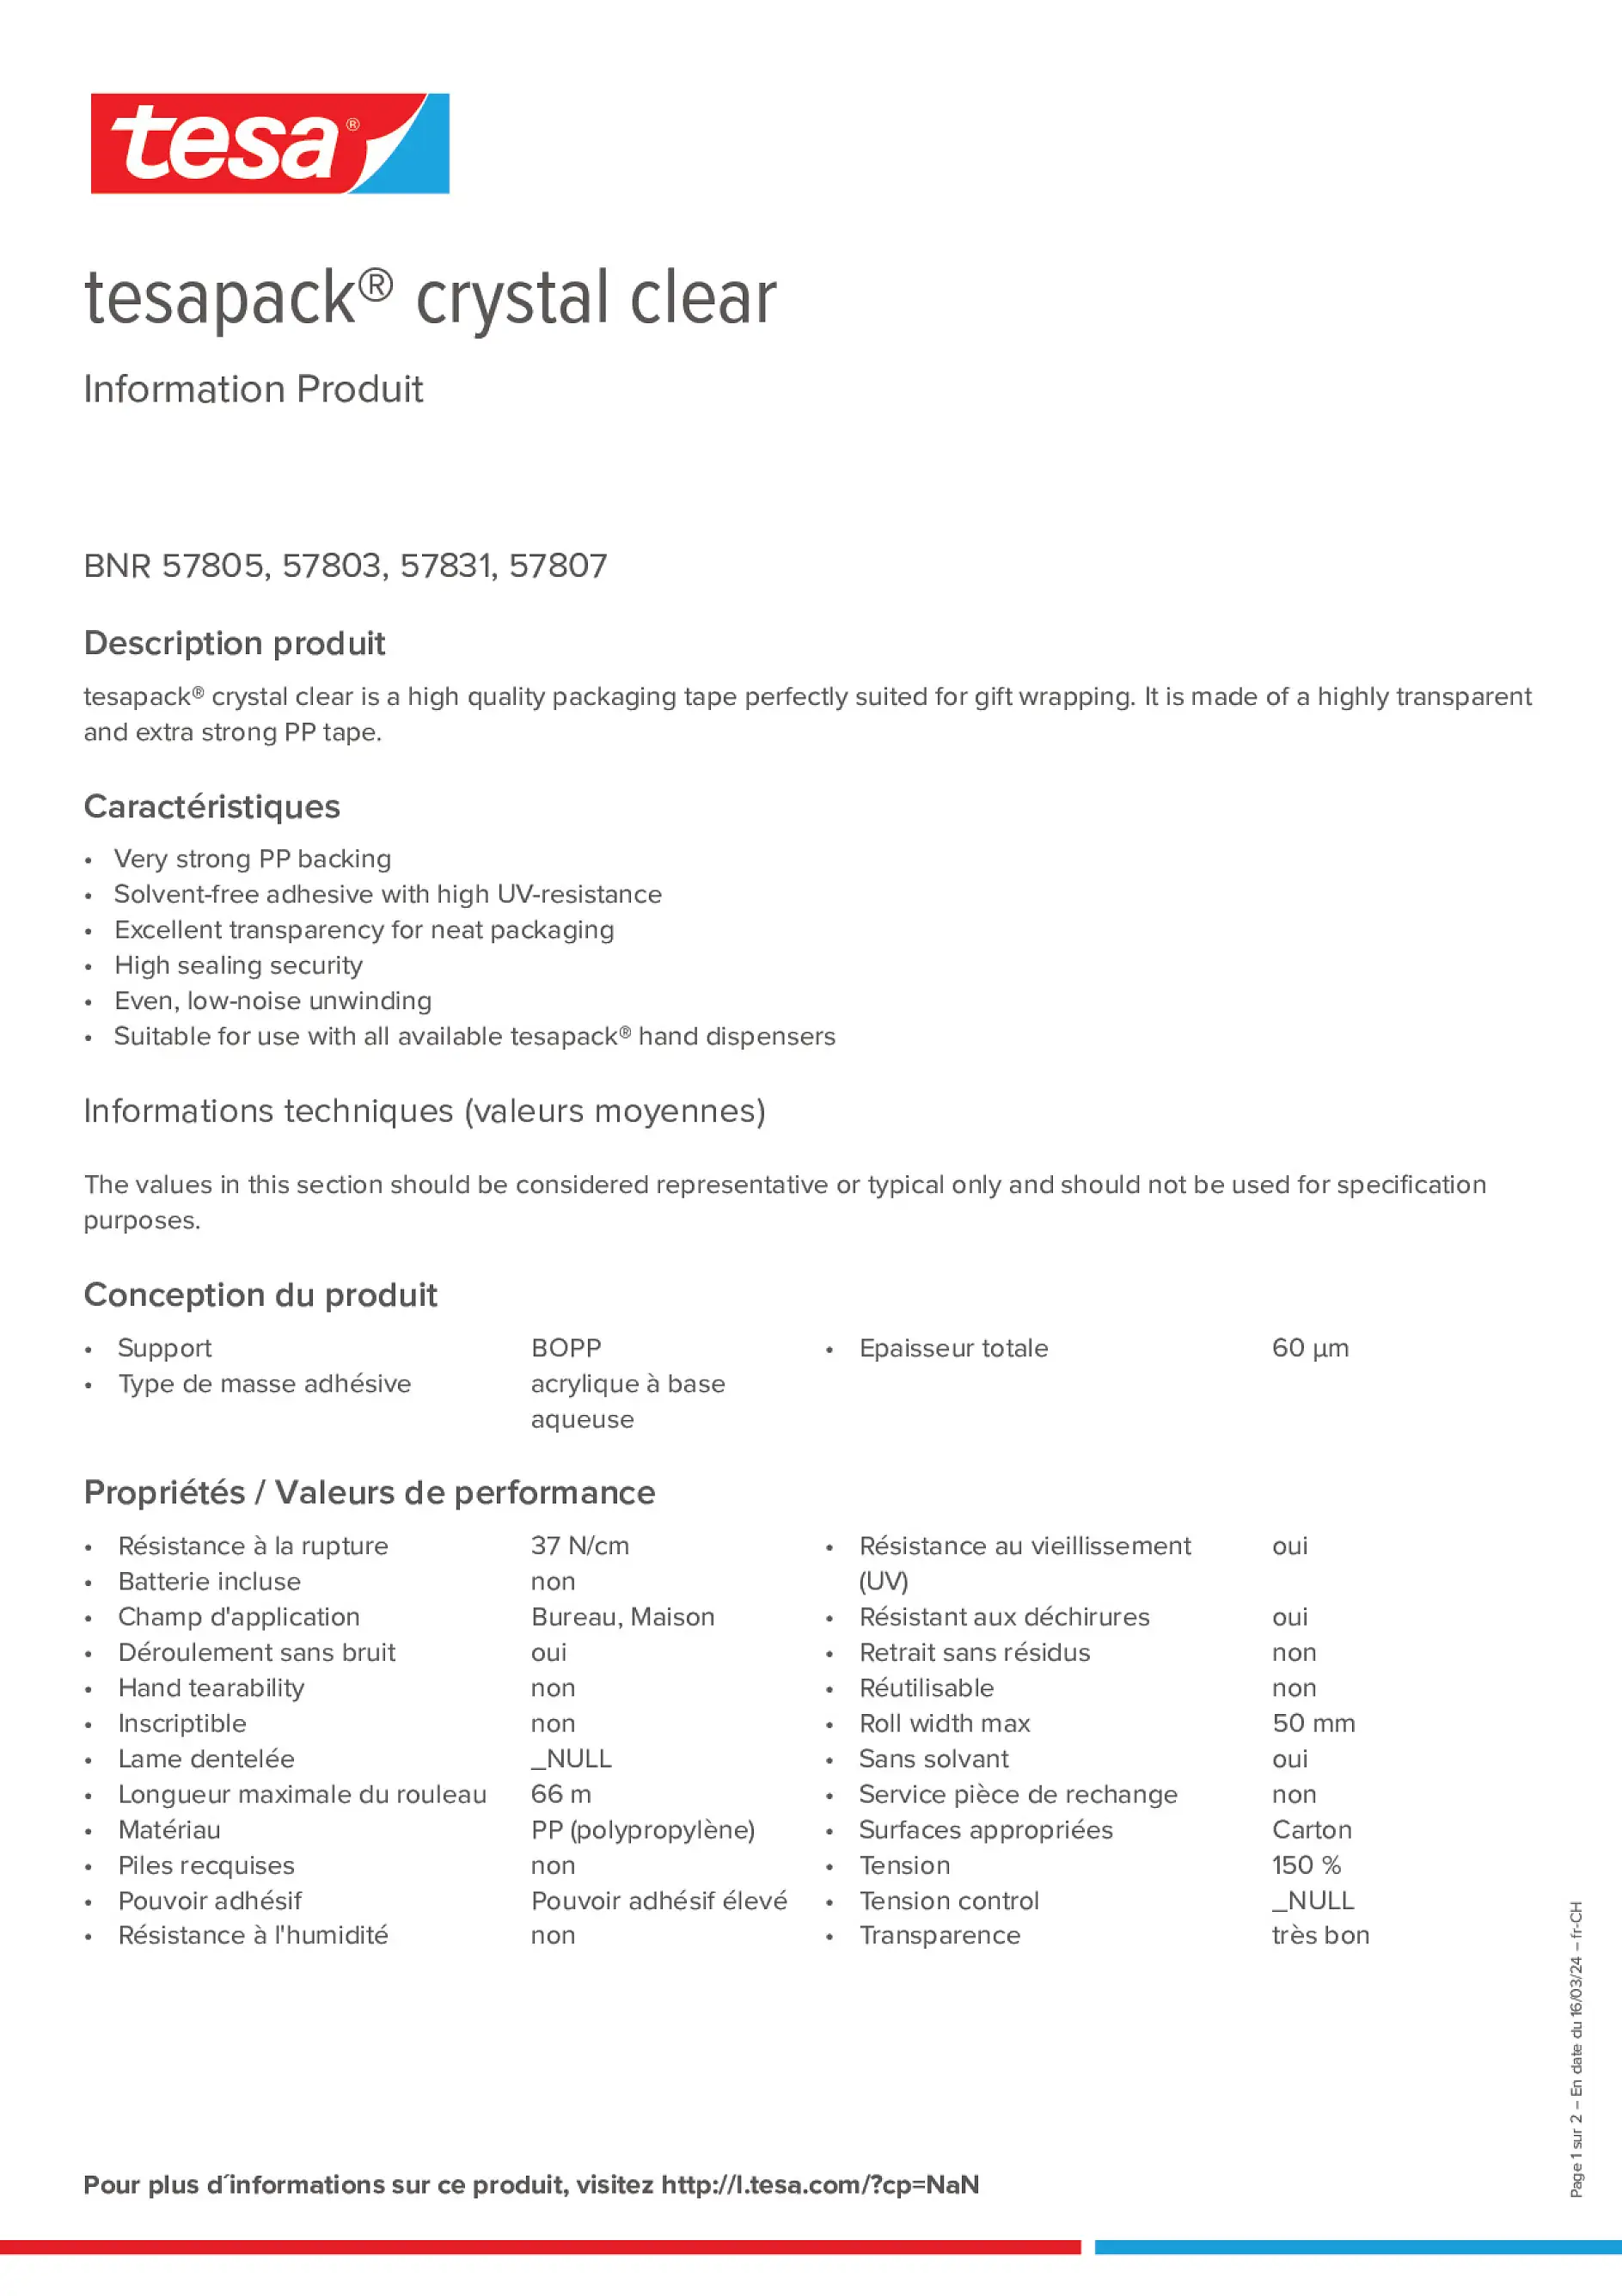 Product information_tesapack® 57807_de-CH_fr-CH